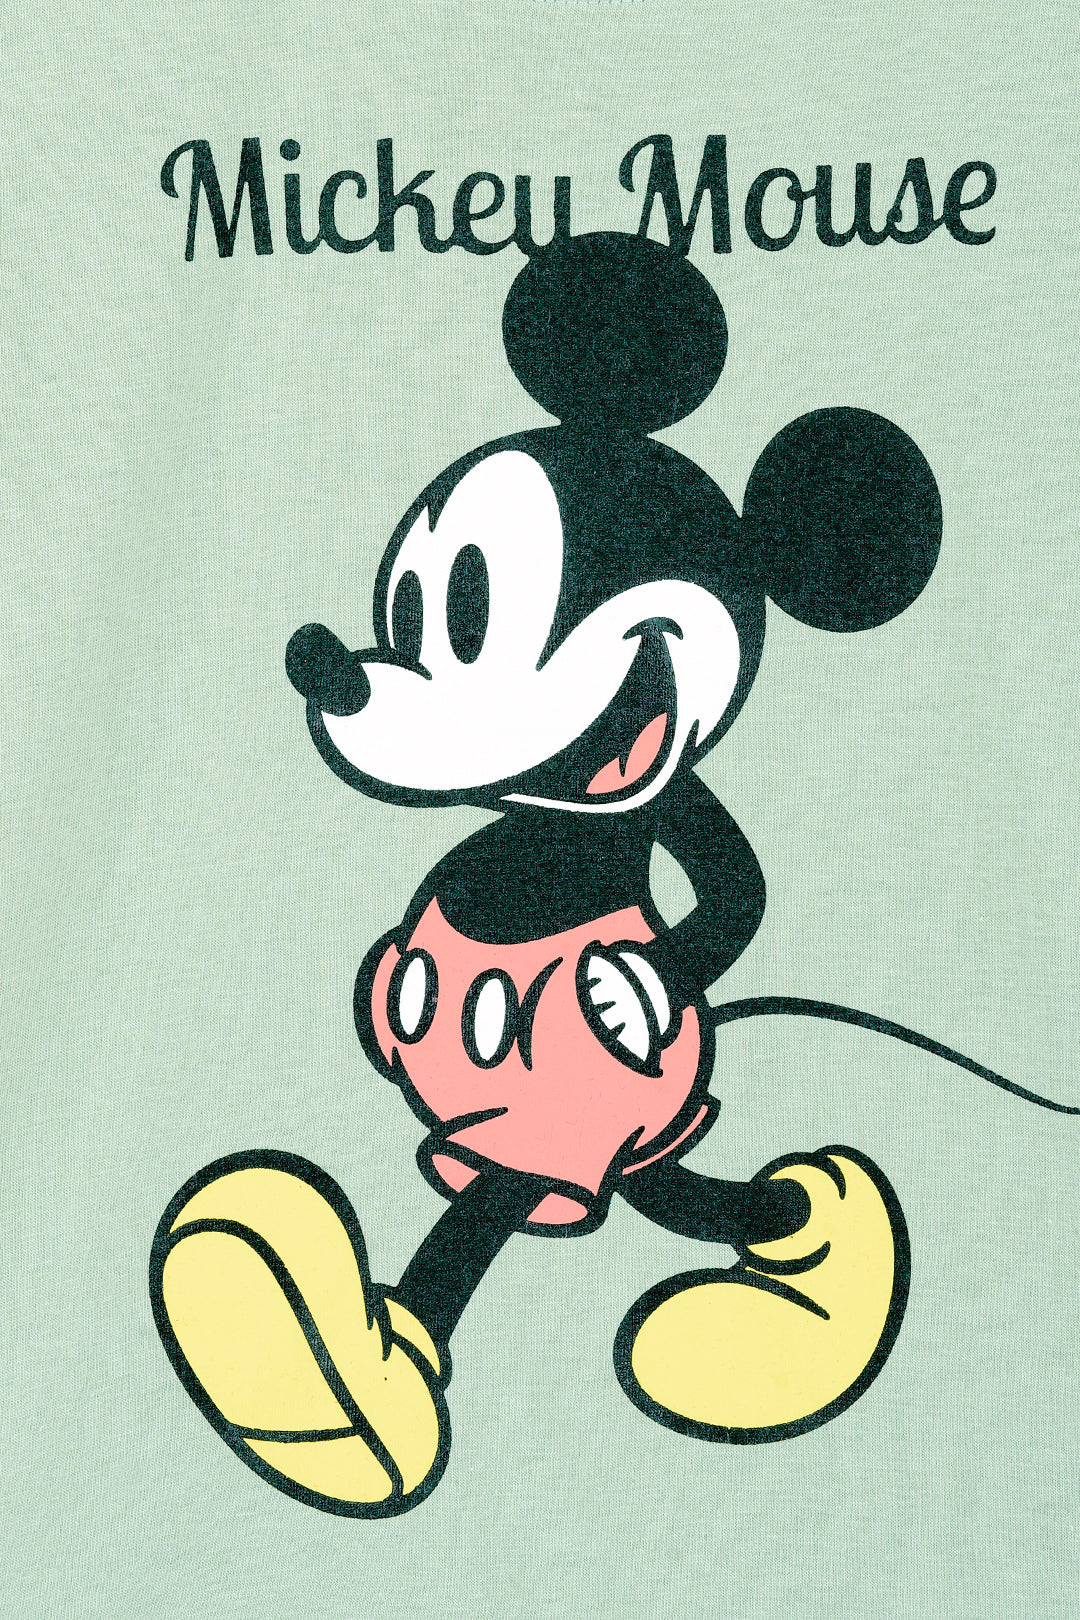 Mickey Classic T-Shirt